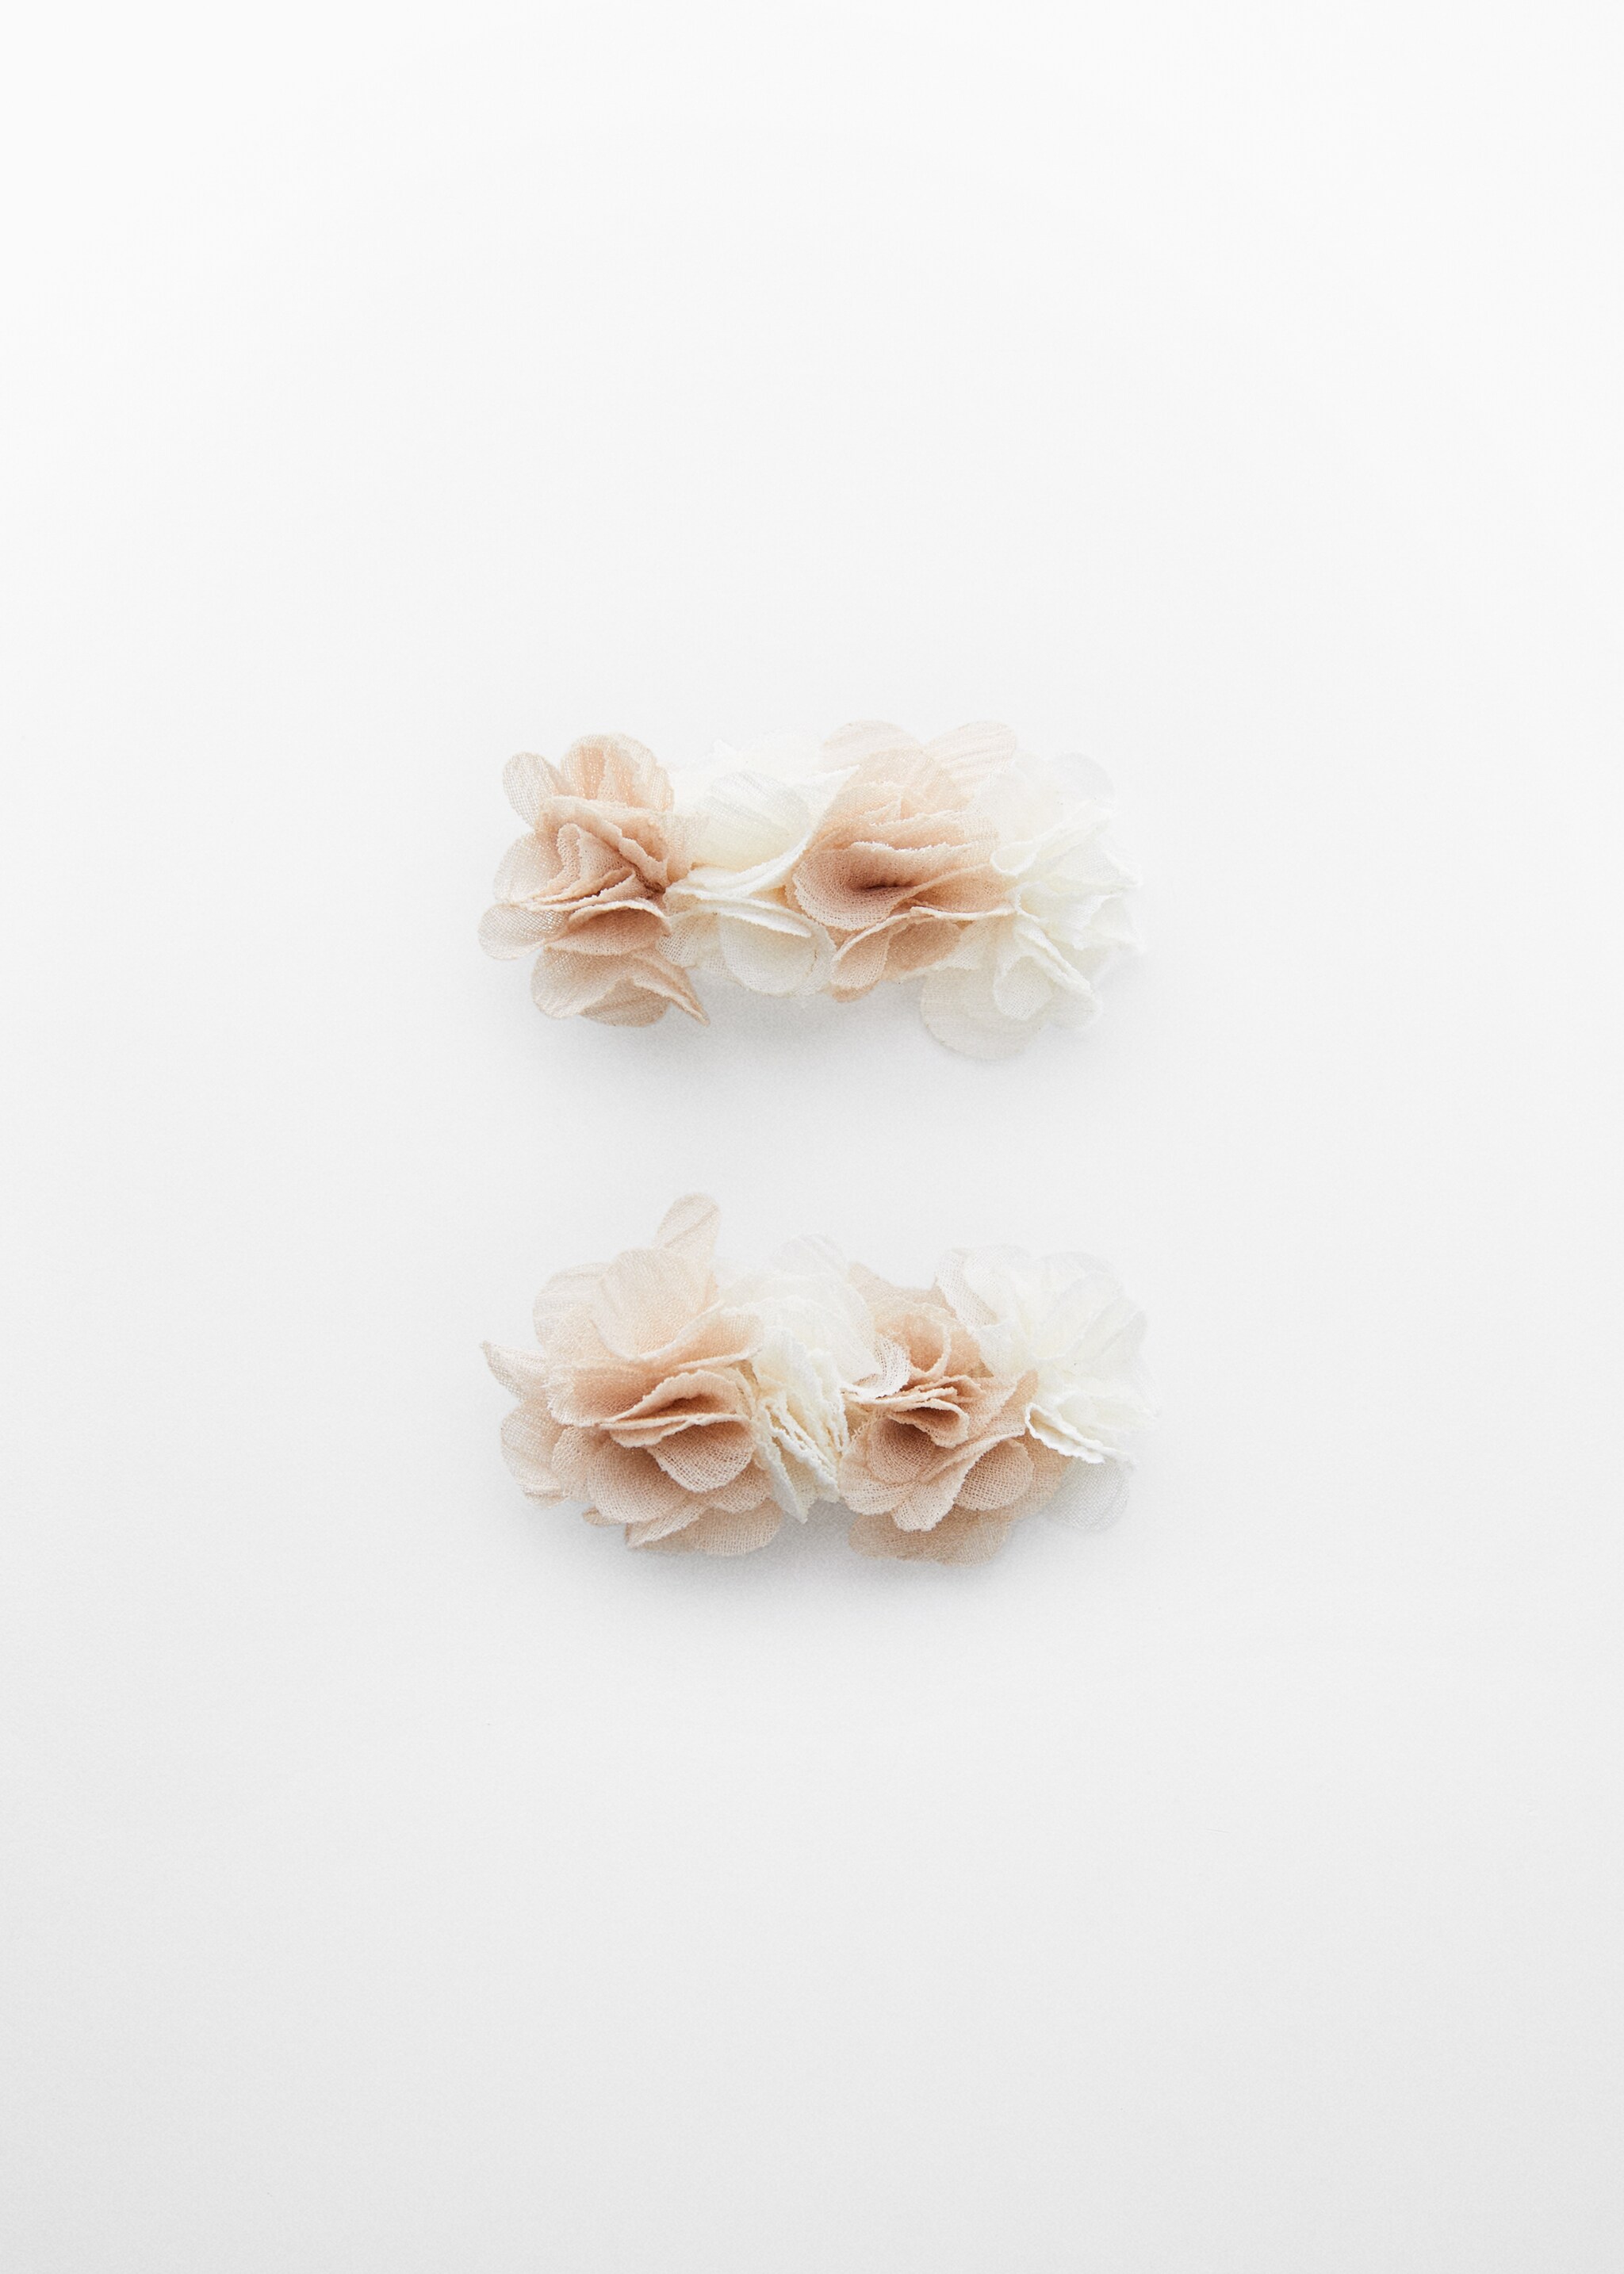 Две заколки с цветочками - Изделие без модели